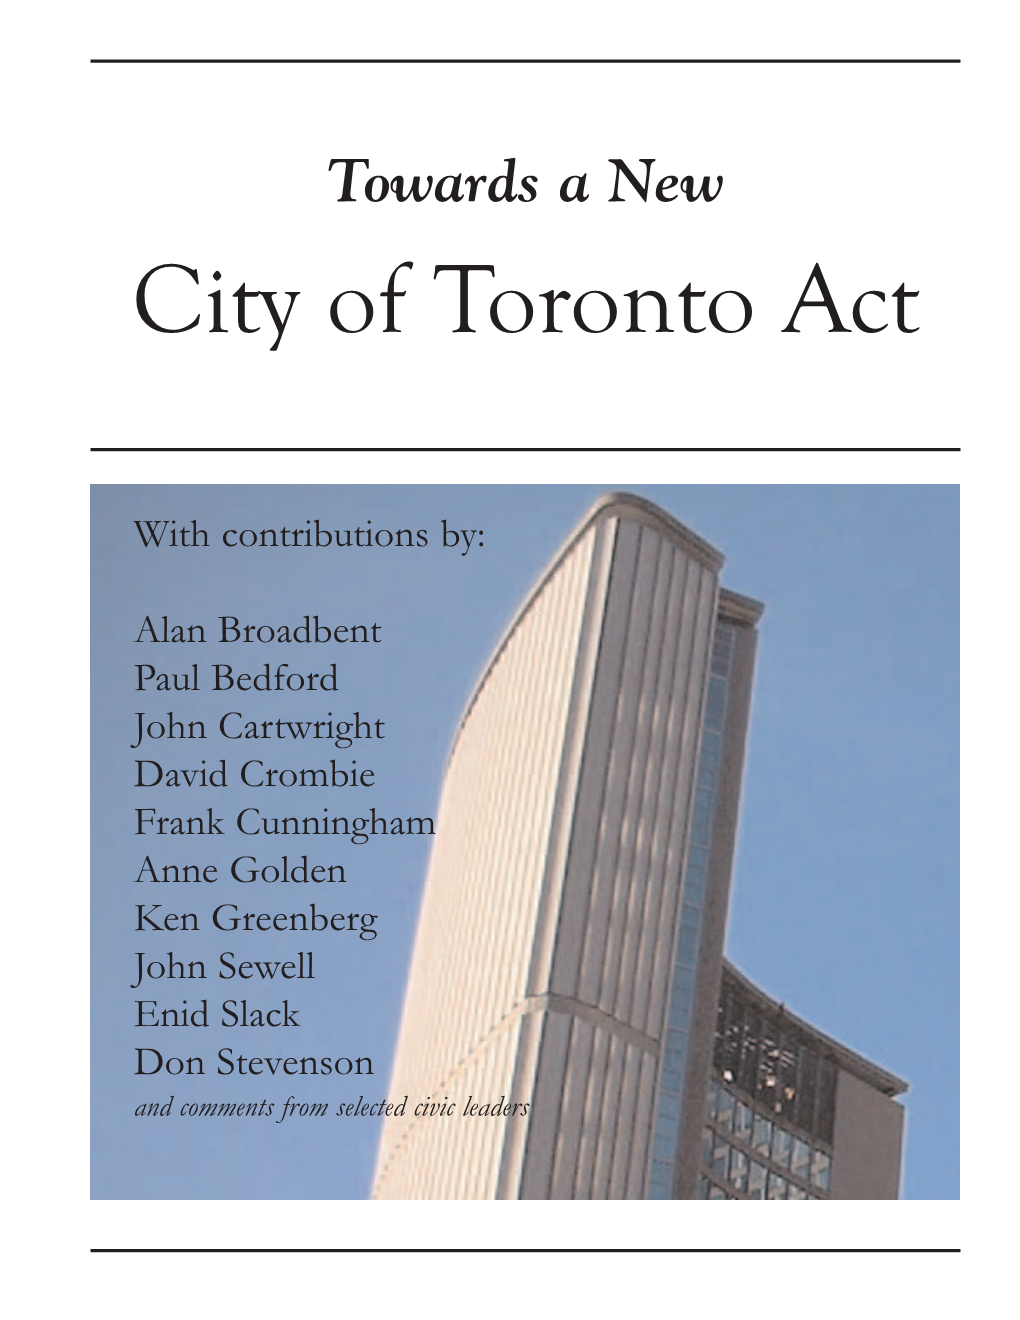 City of Toronto Act